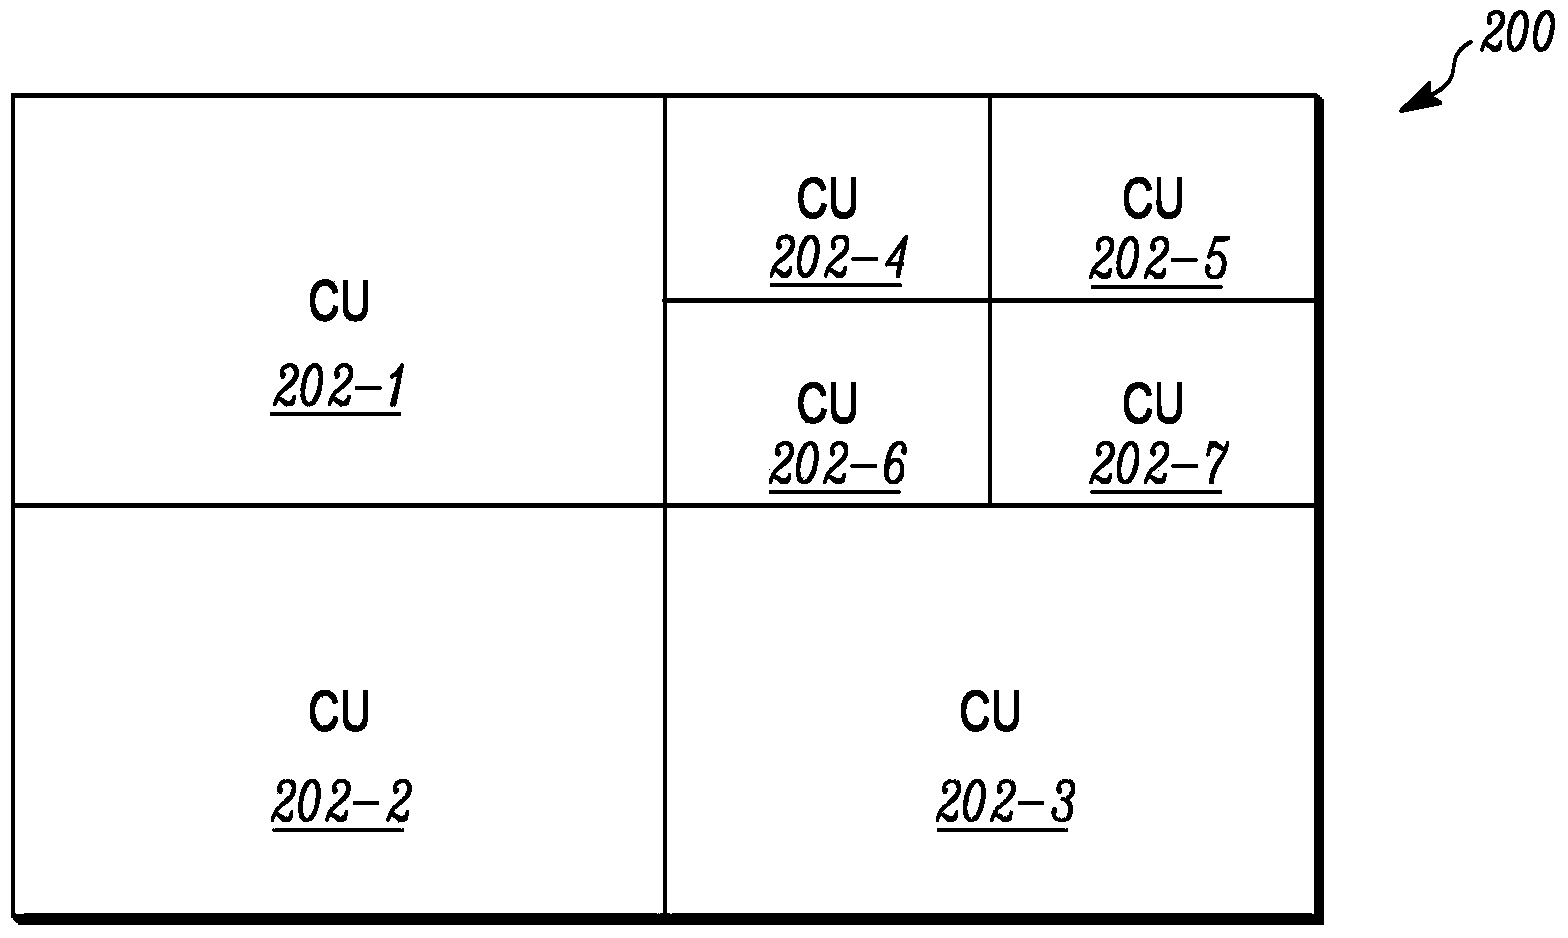 Context modeling techniques for transform coefficient level coding